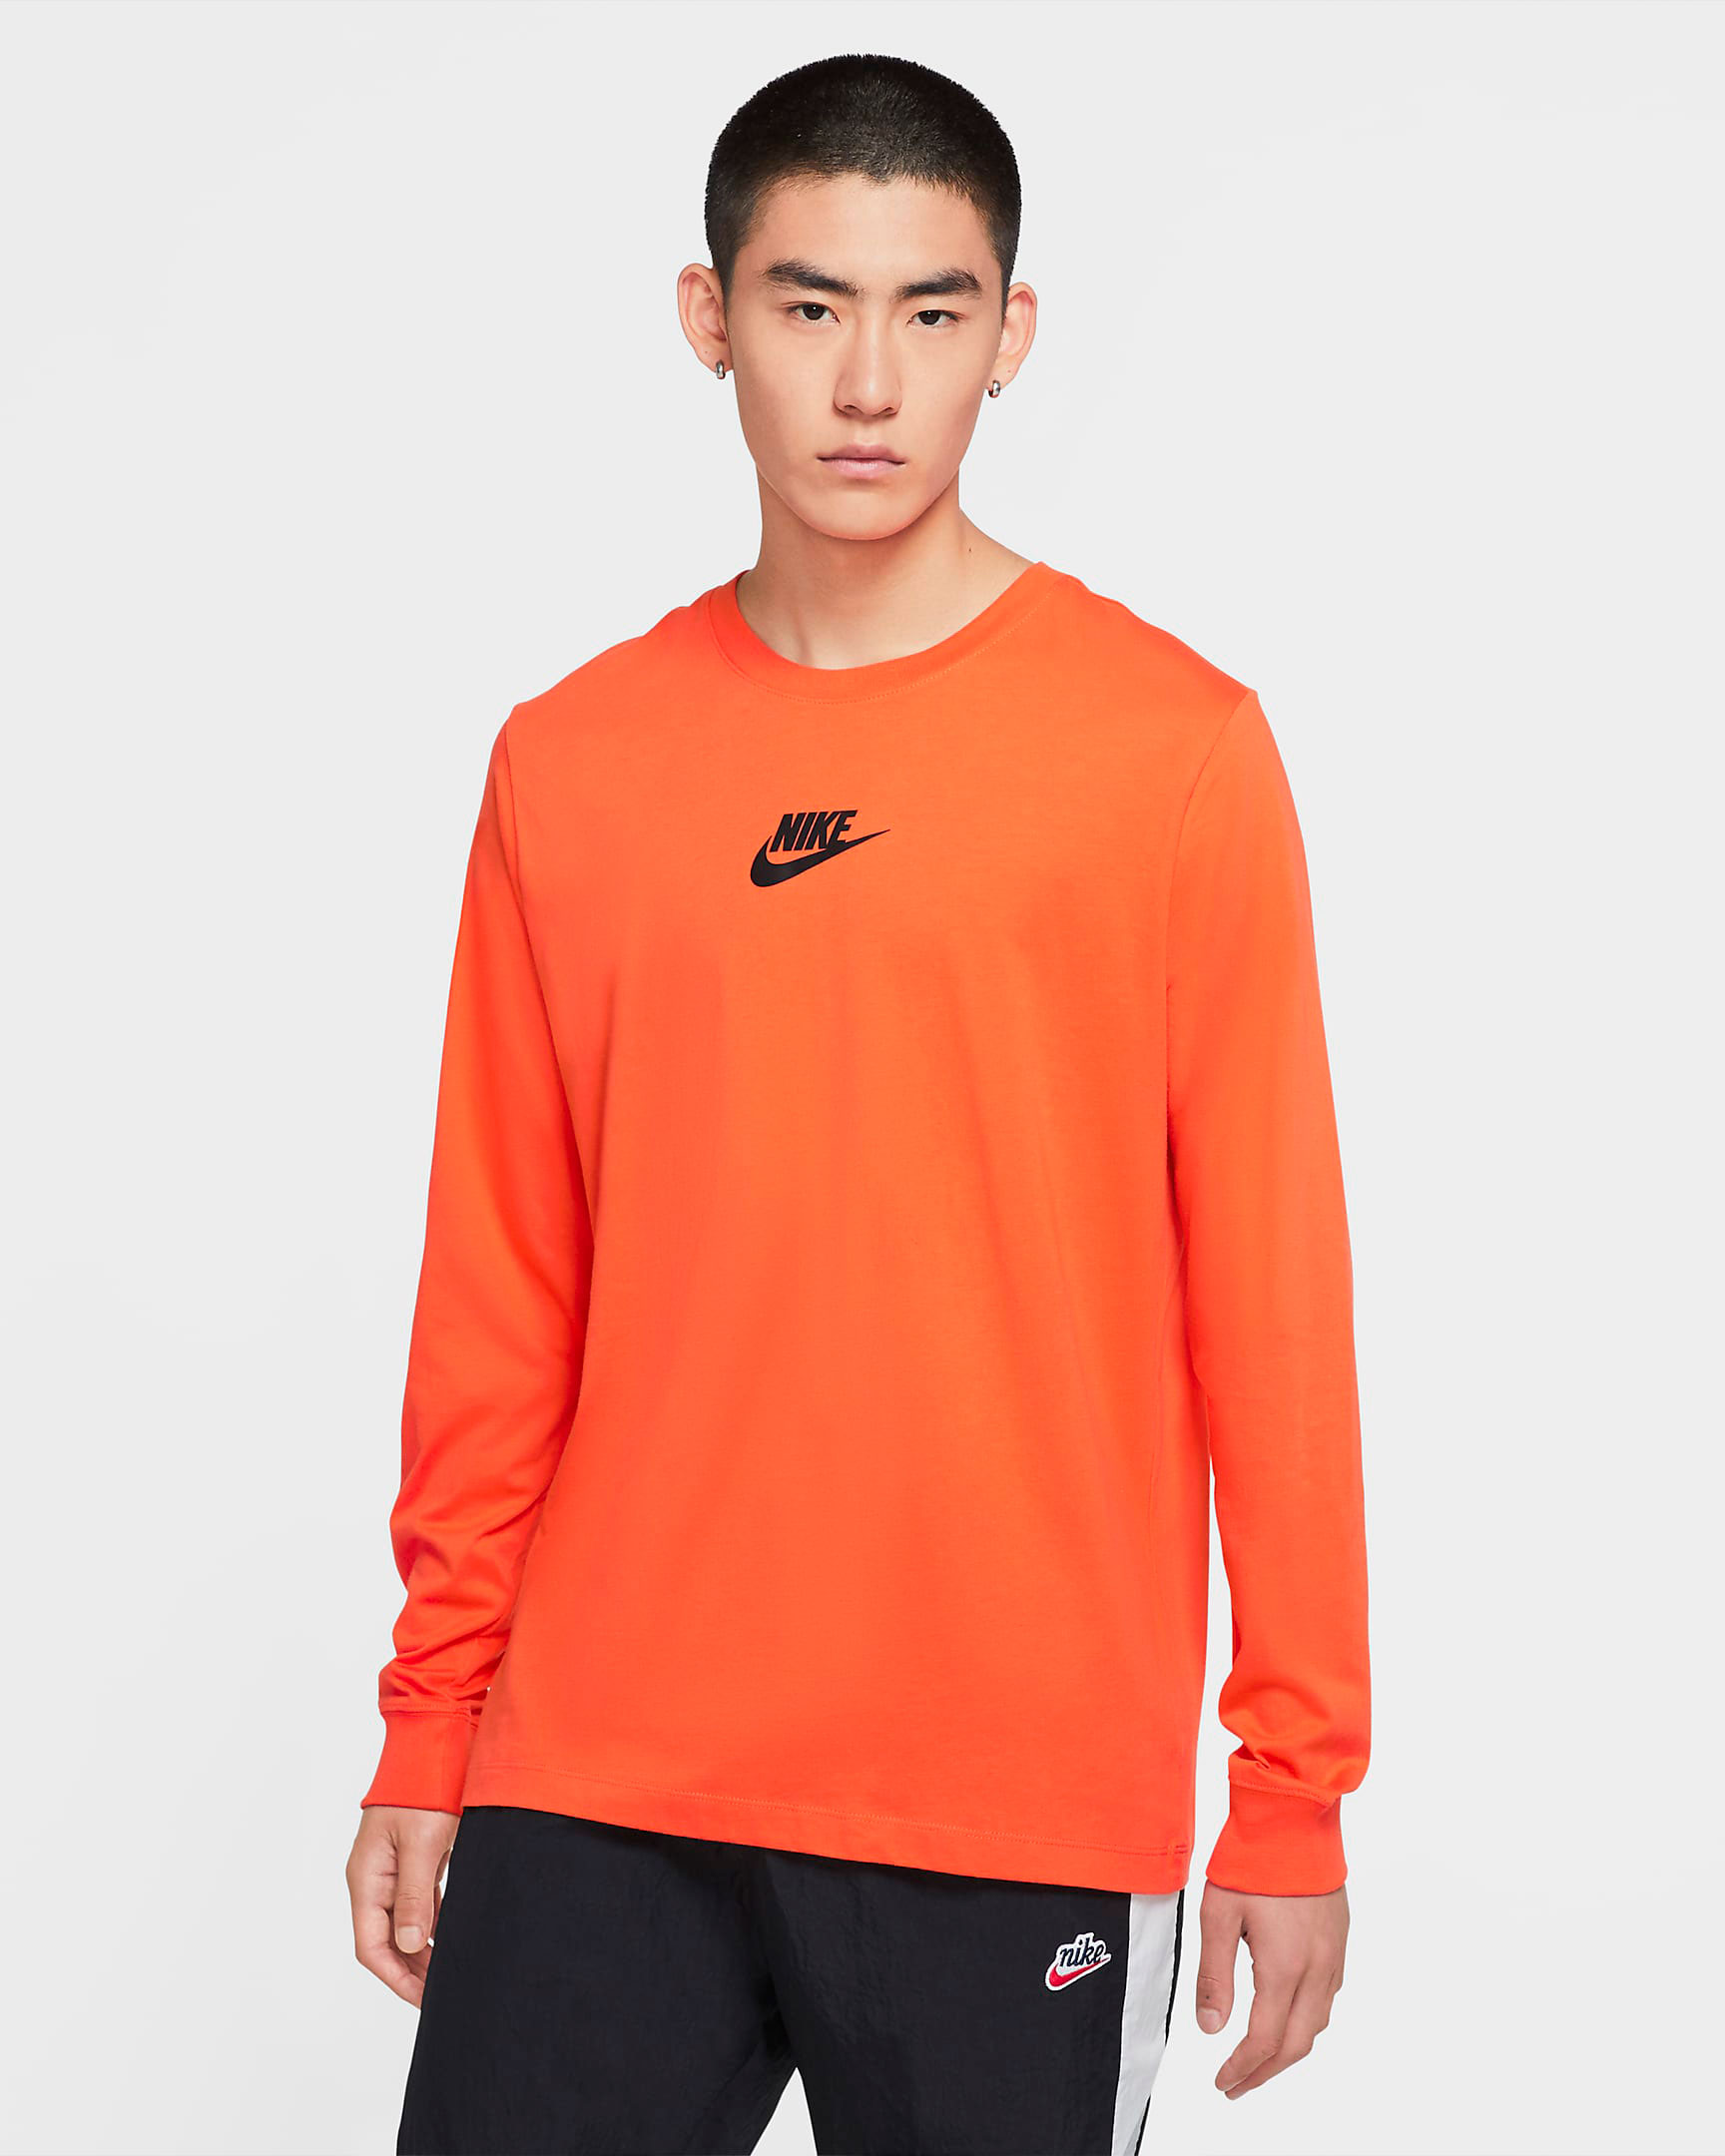 nike-jdi-long-sleeve-shirt-orange-1